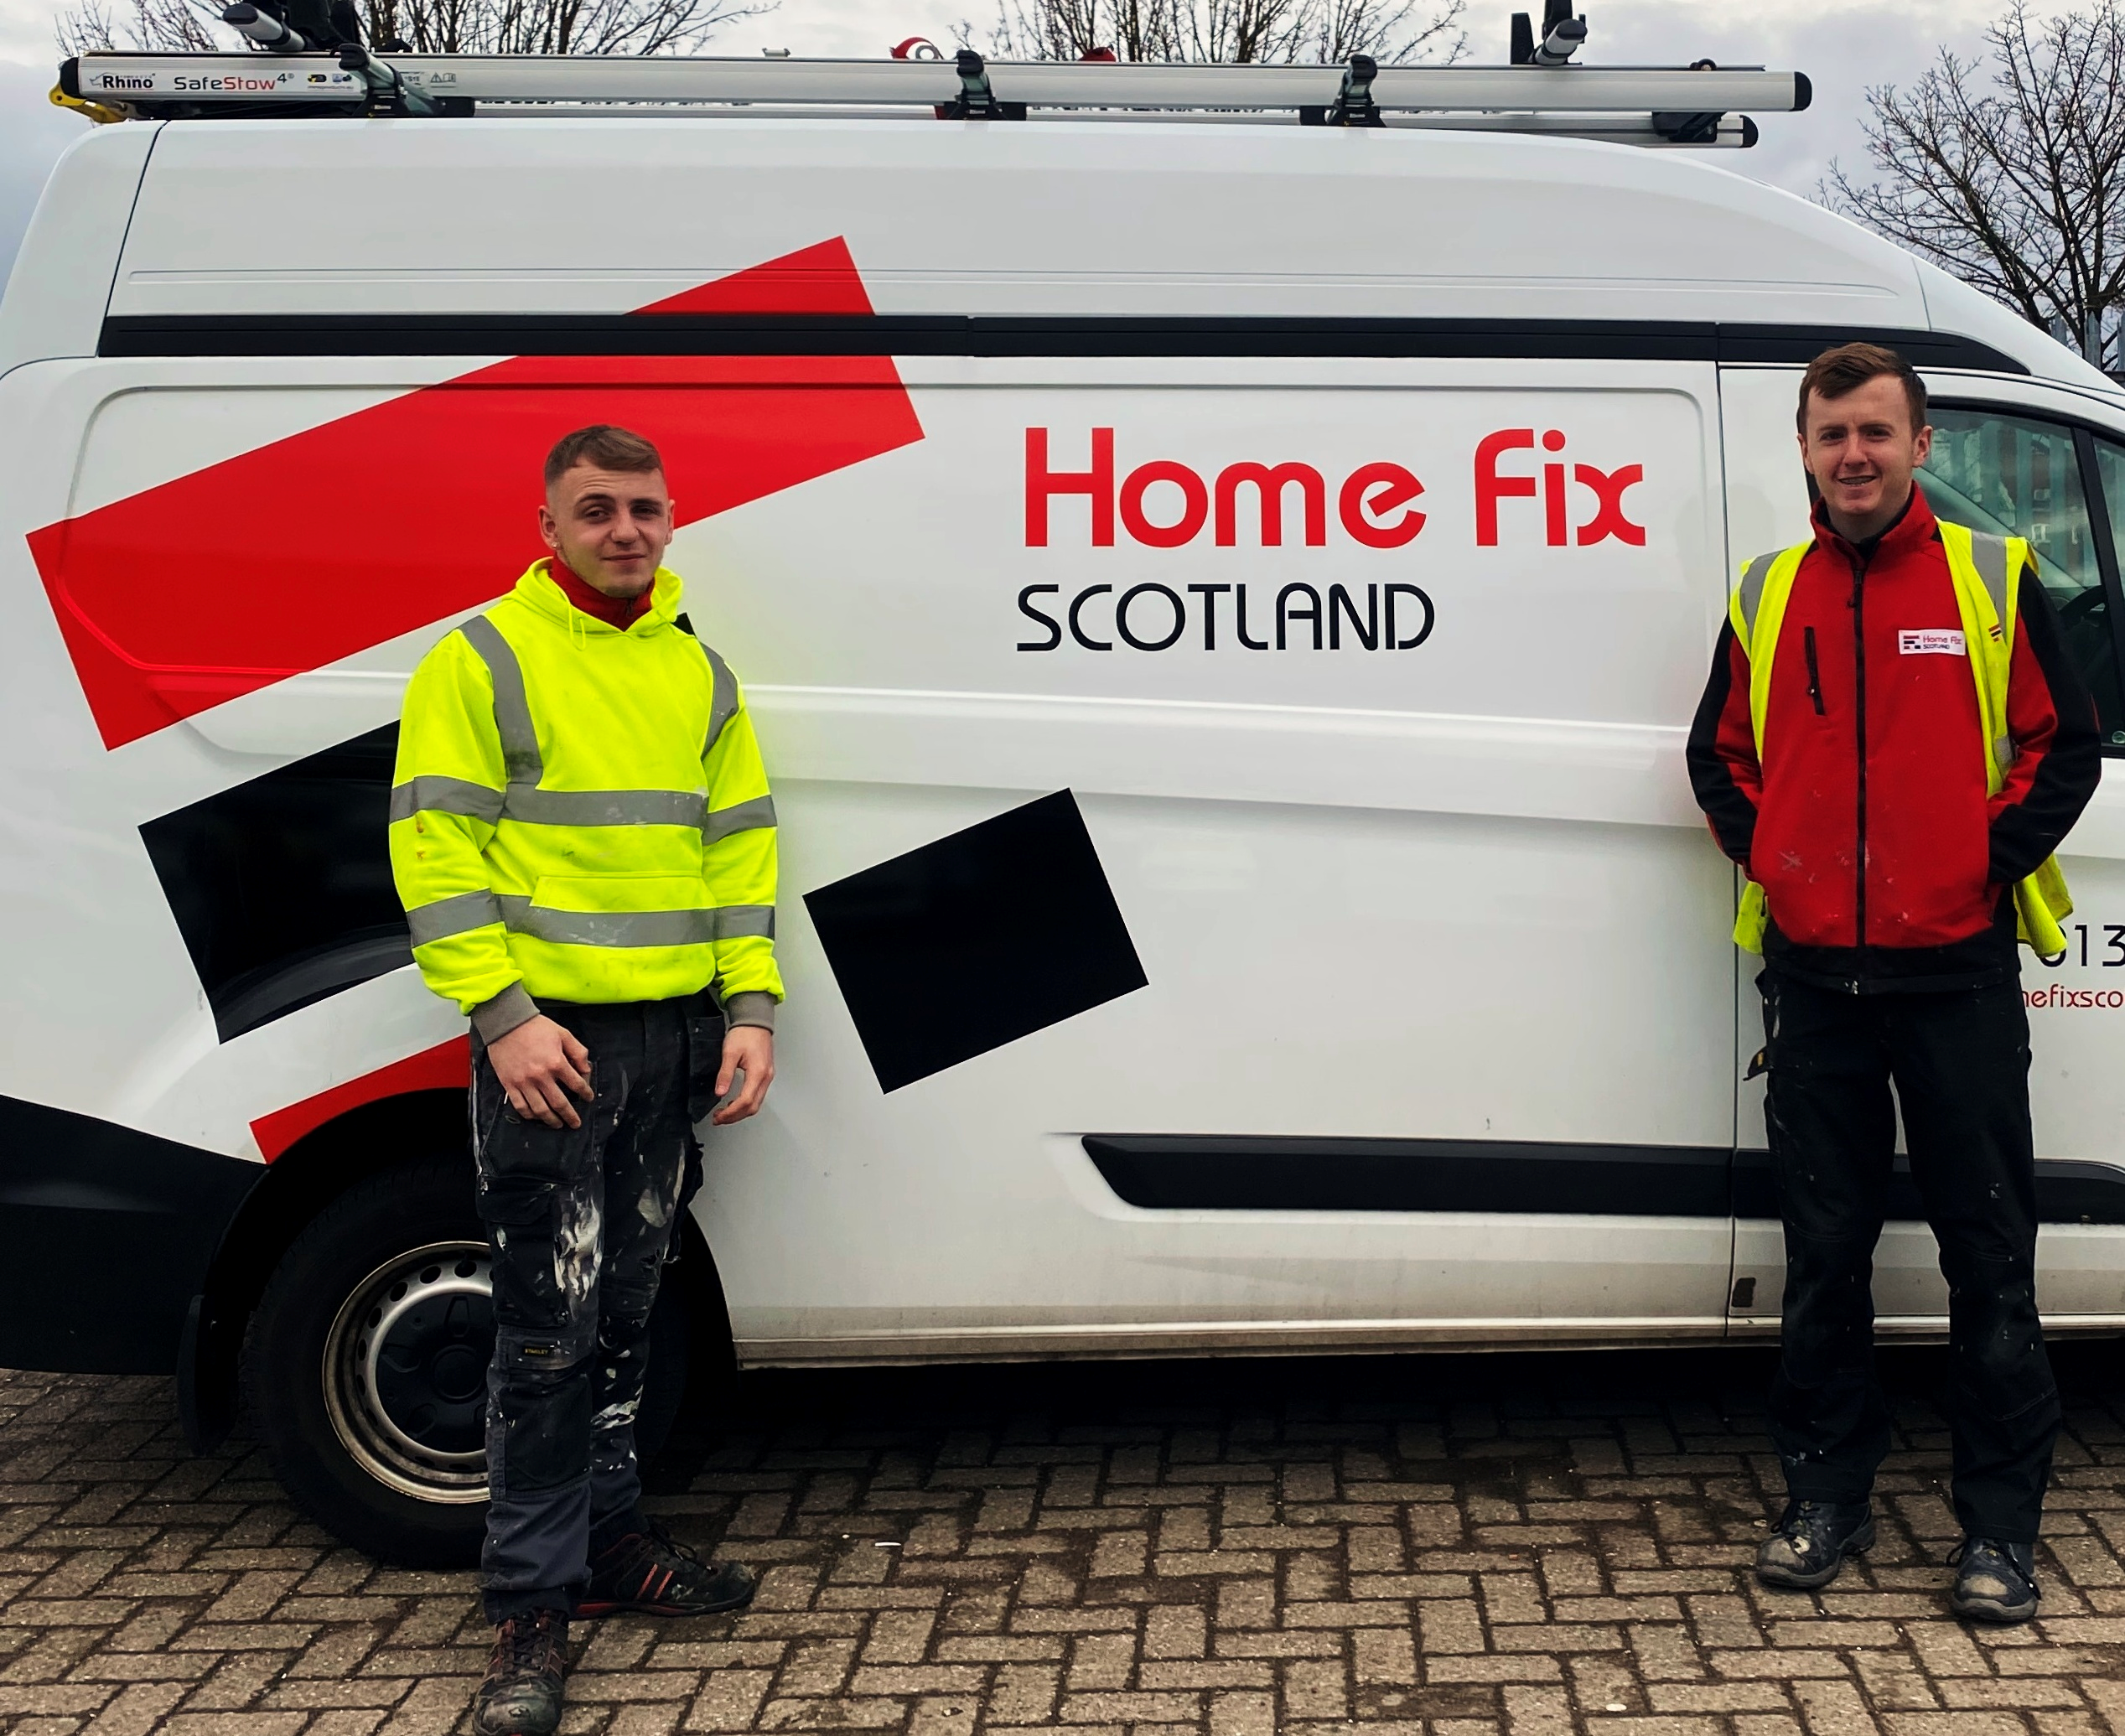 Home Fix Scotland hails work of apprentices